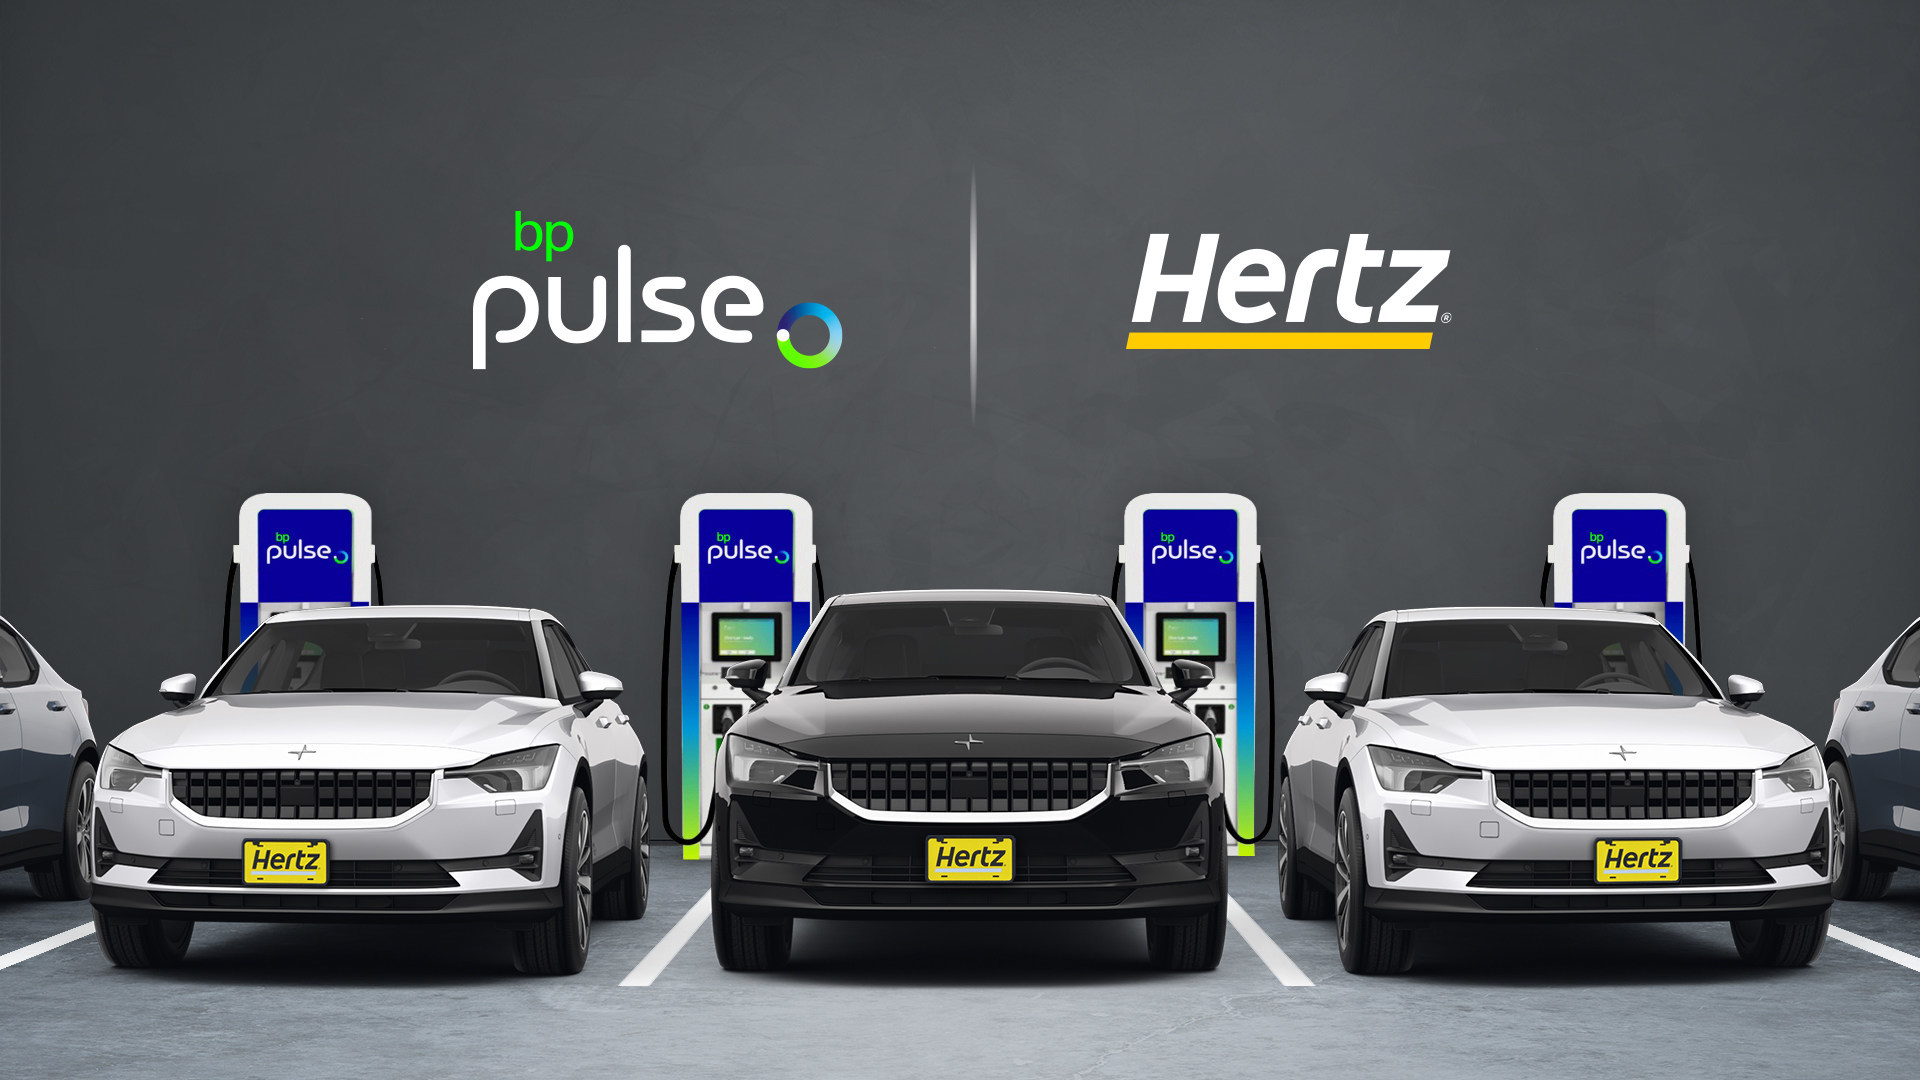 bp pulse gets foothold in America with Hertz rental deal